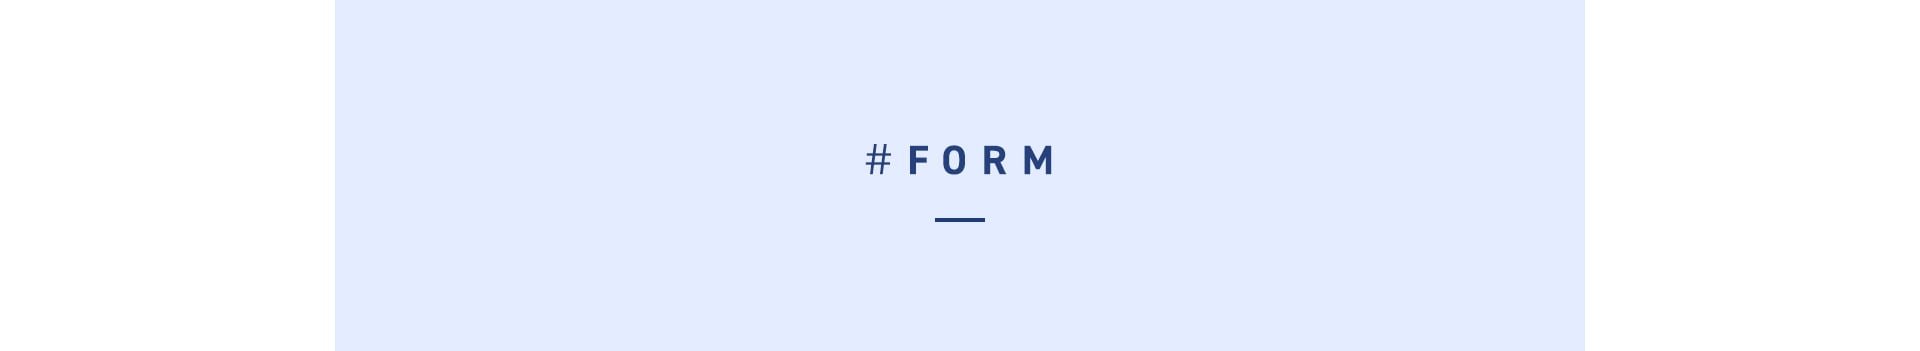 06_form